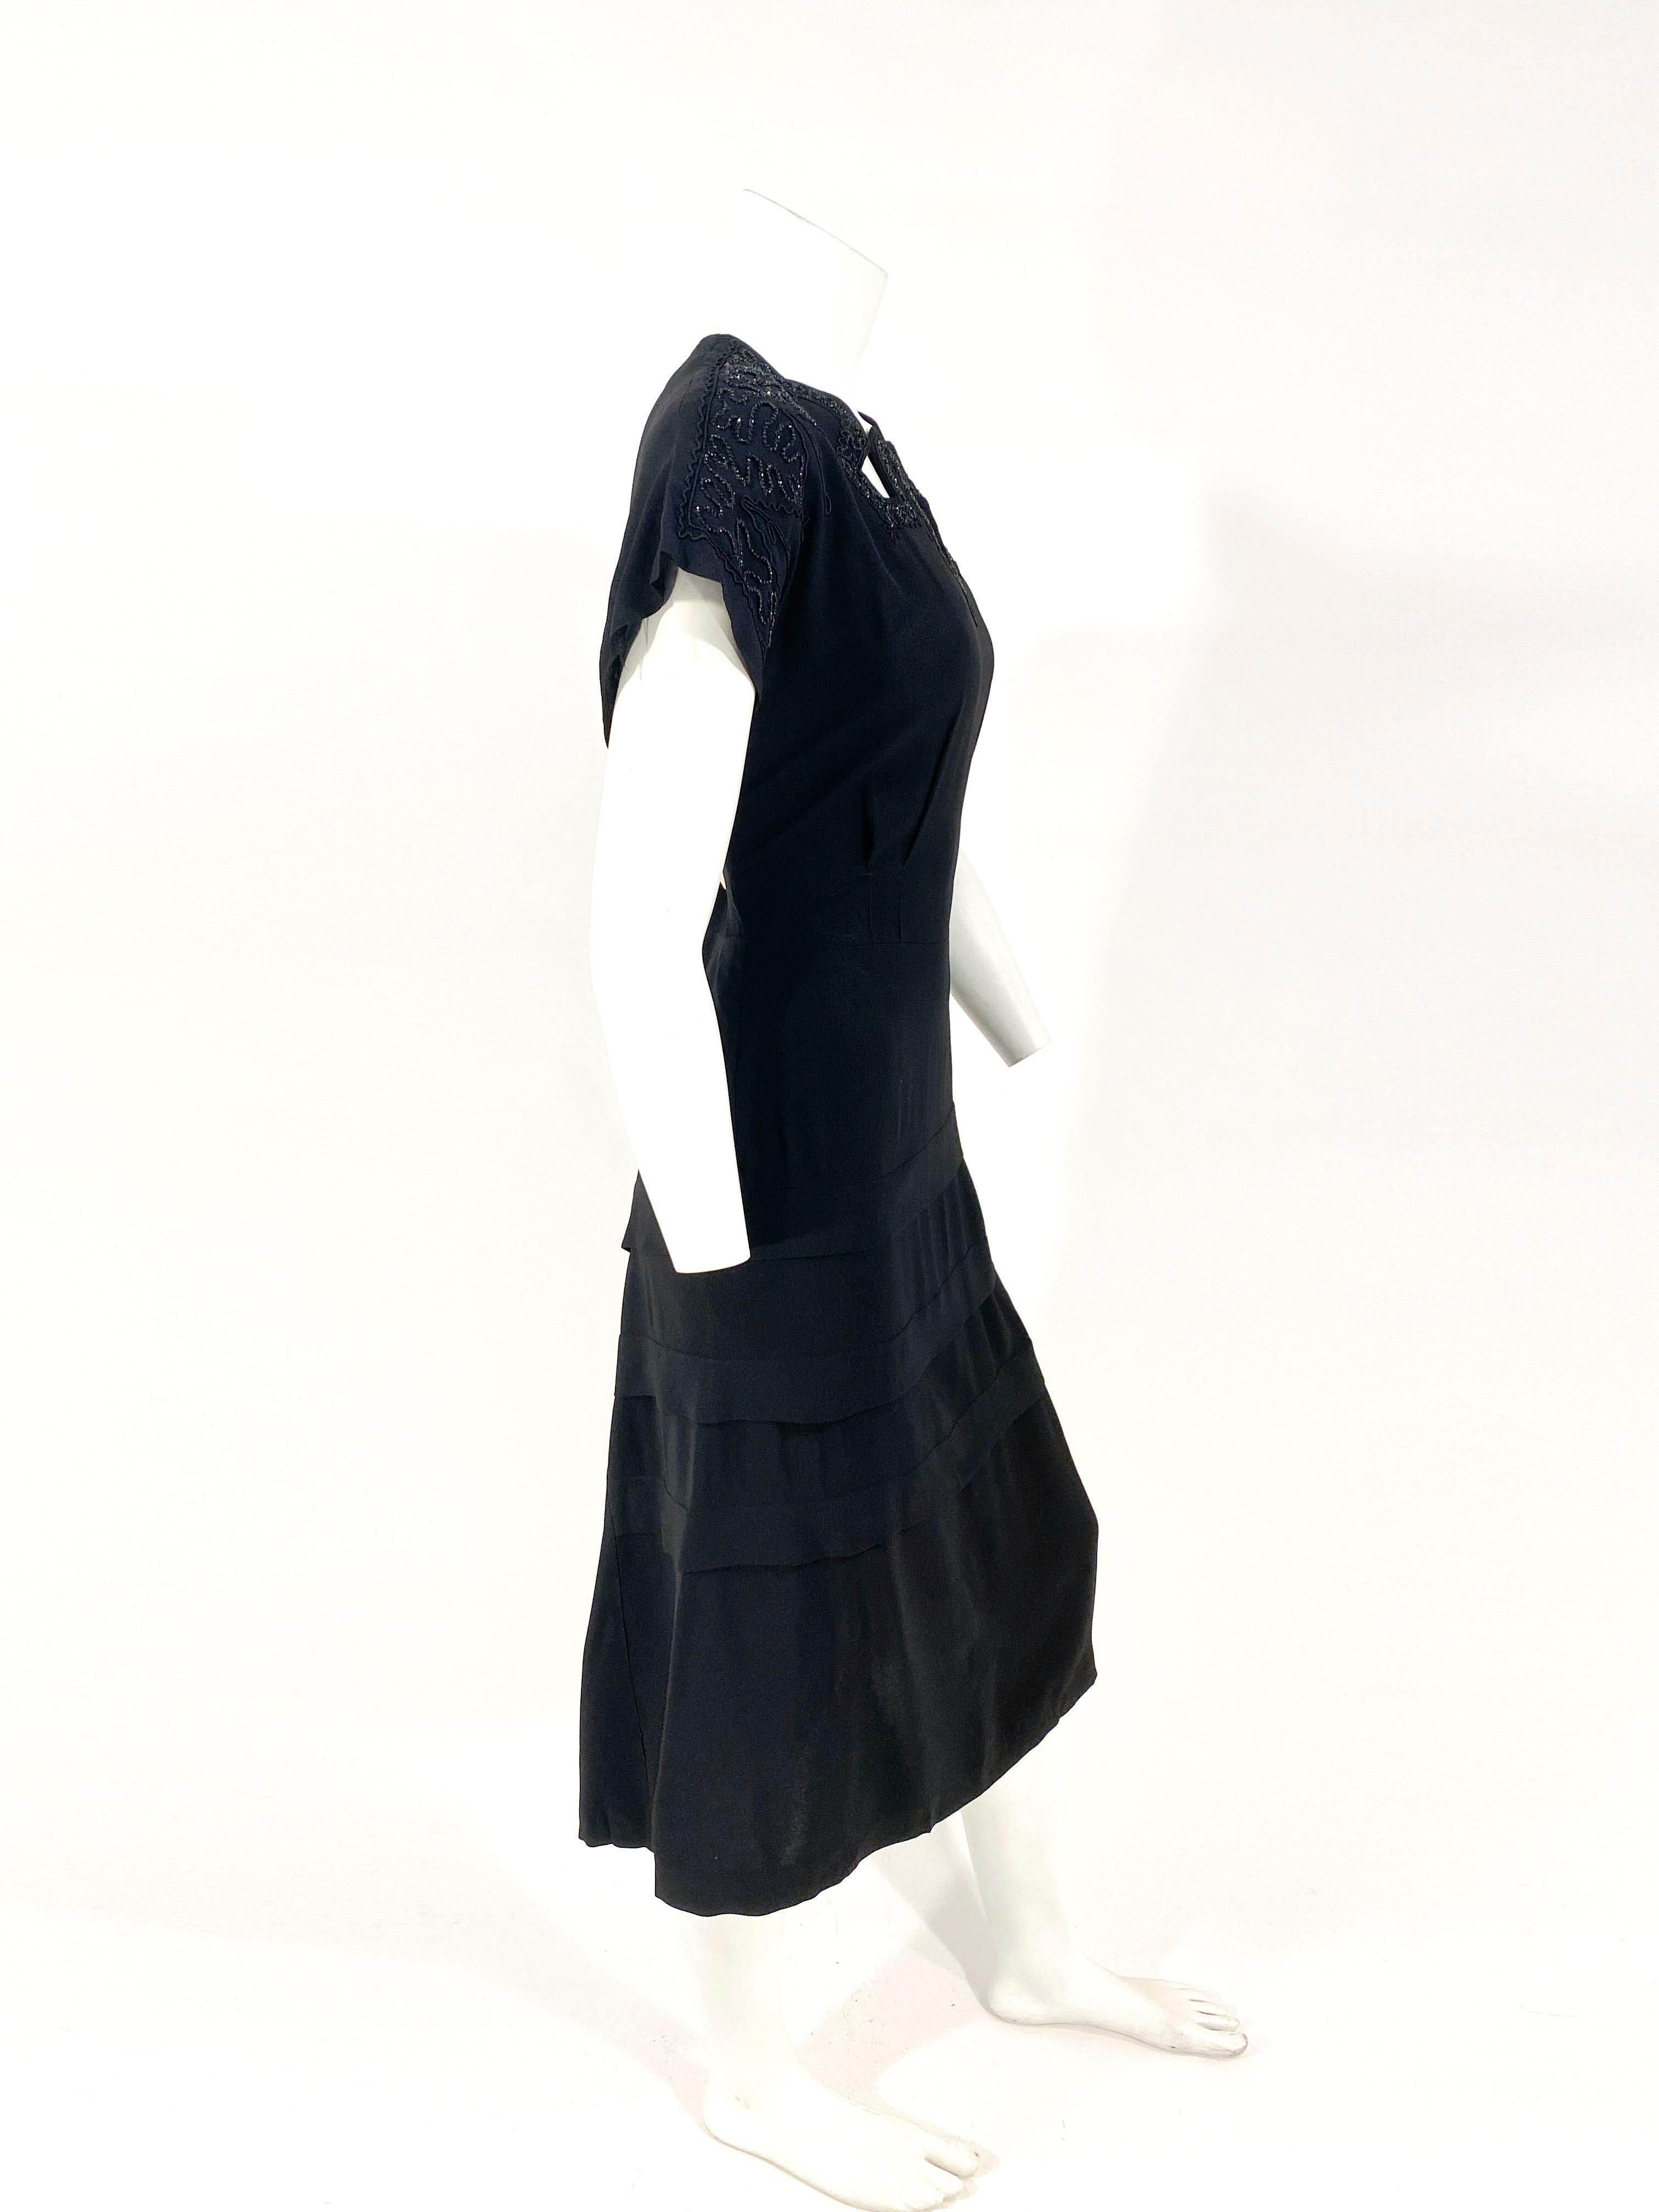 Women's 1940s Black Crepe Cocktail Dress